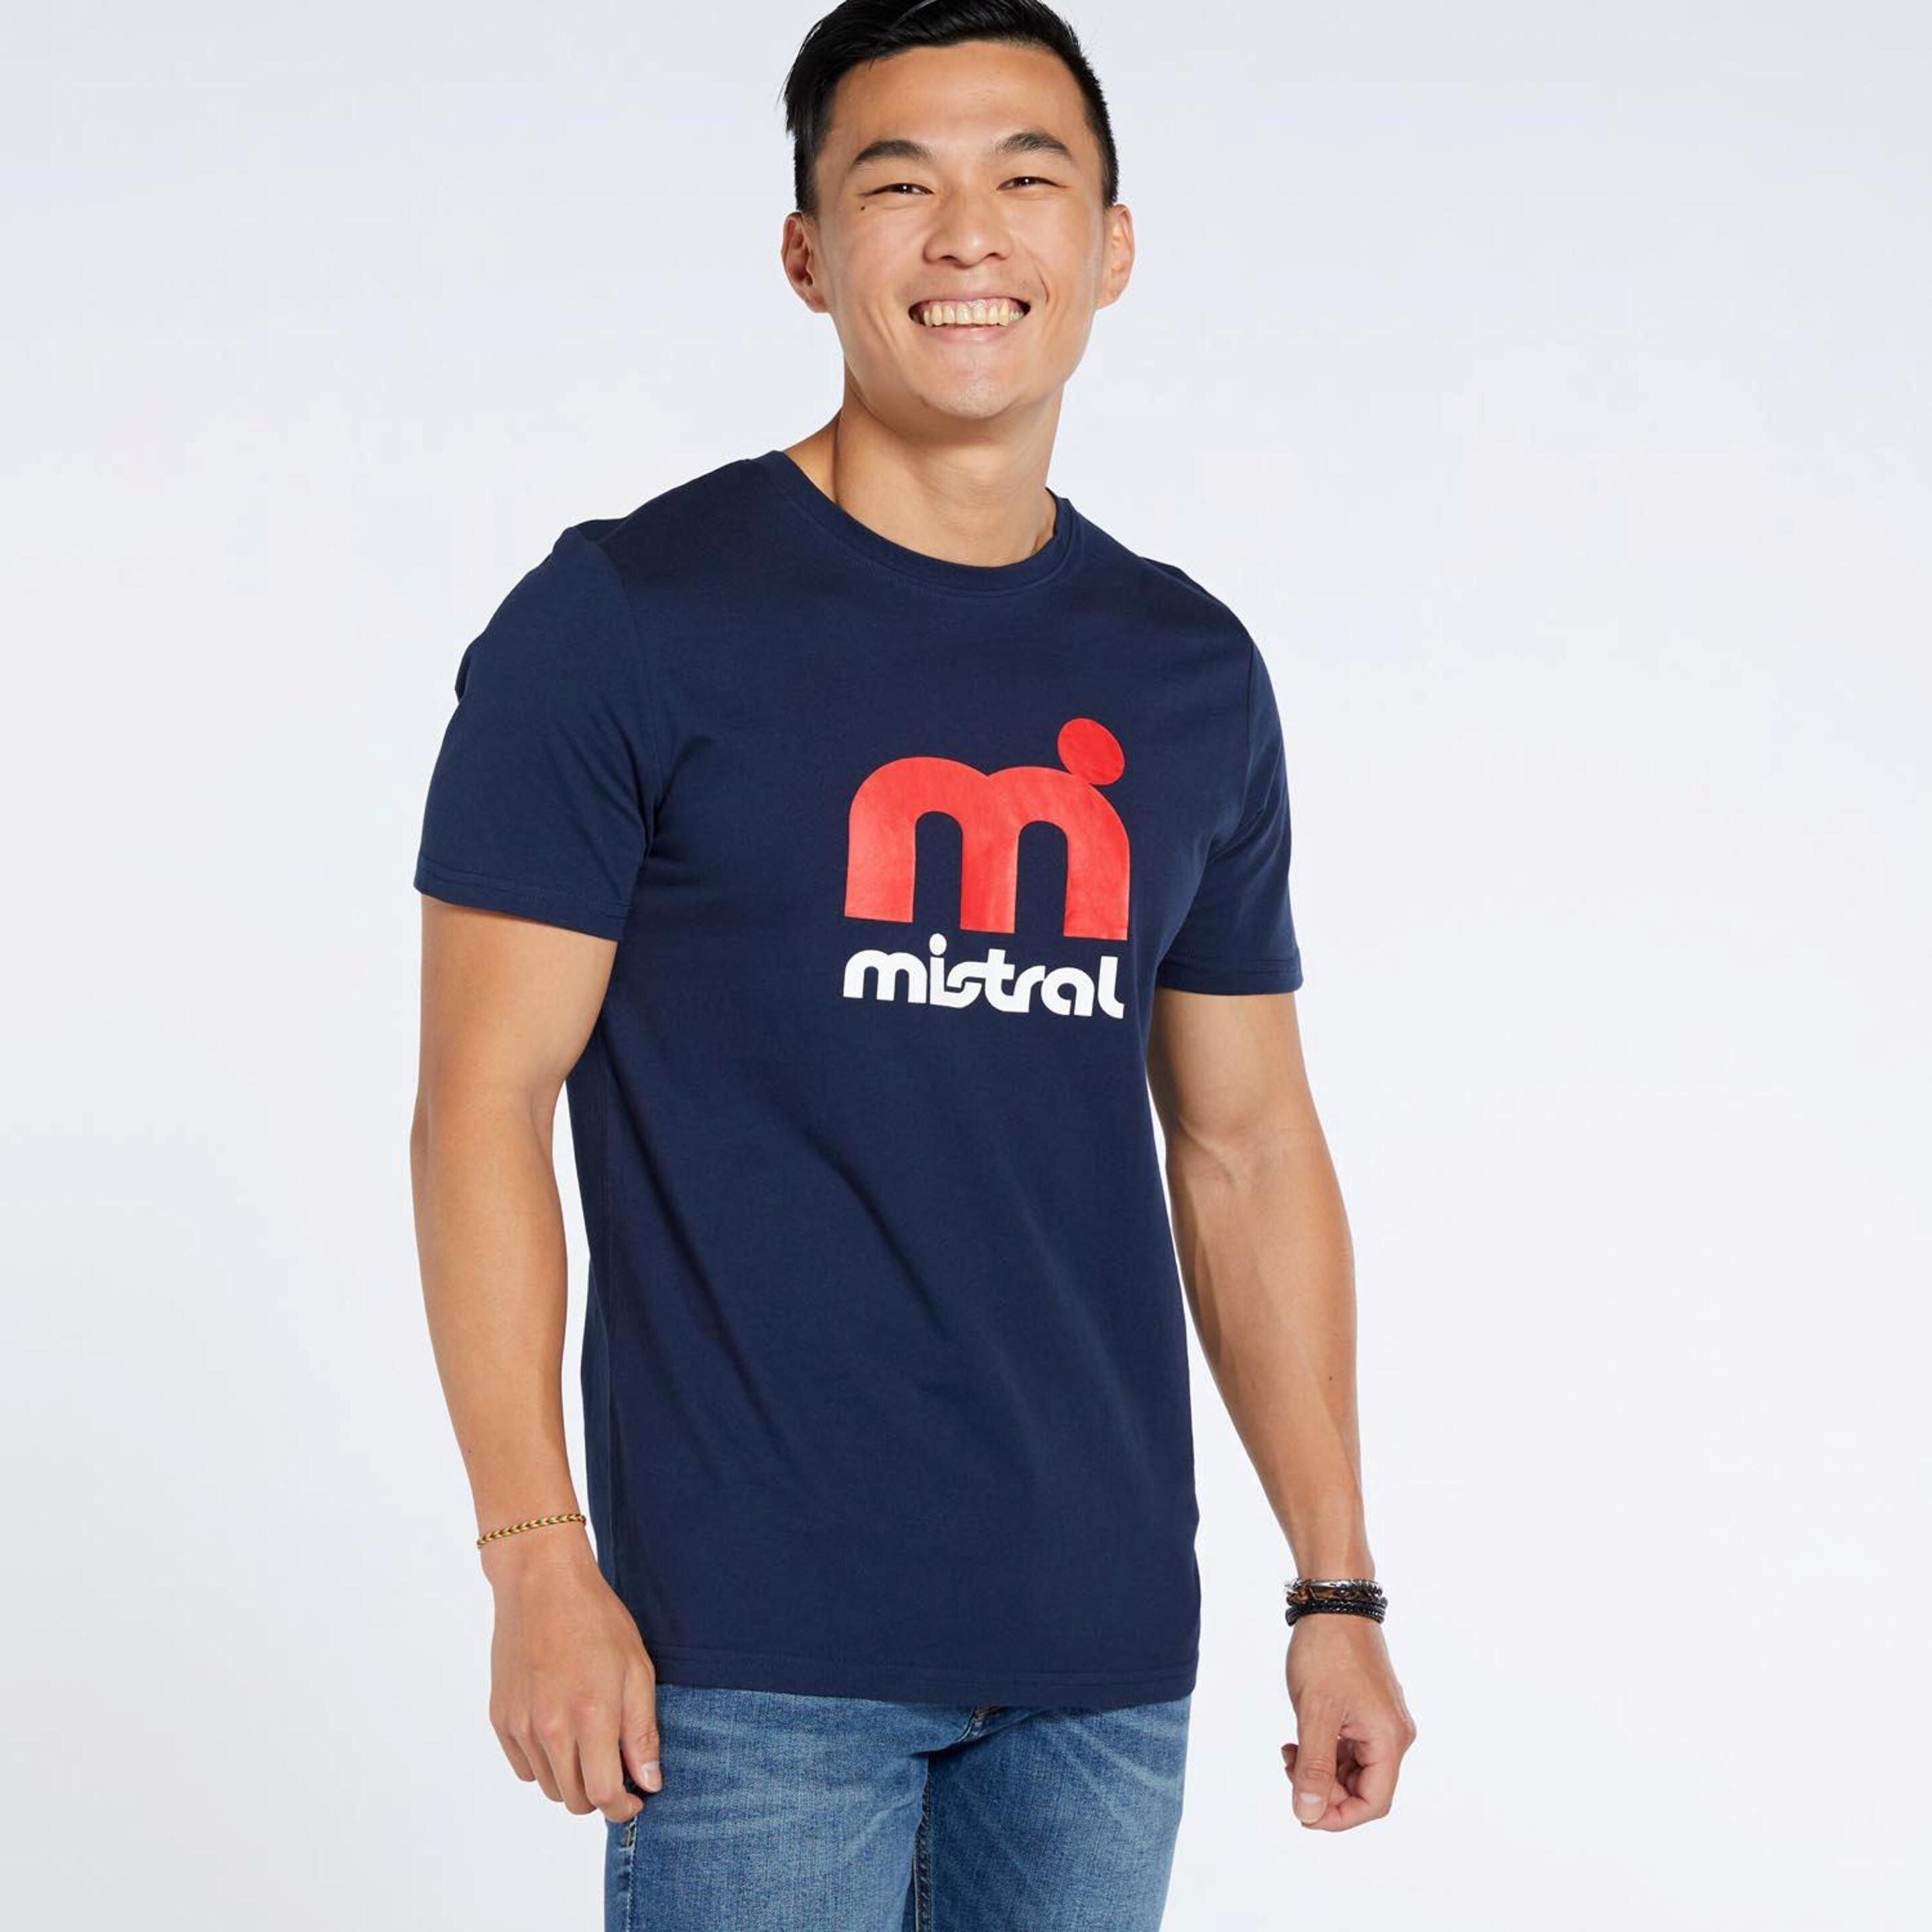 Camiseta Mistral